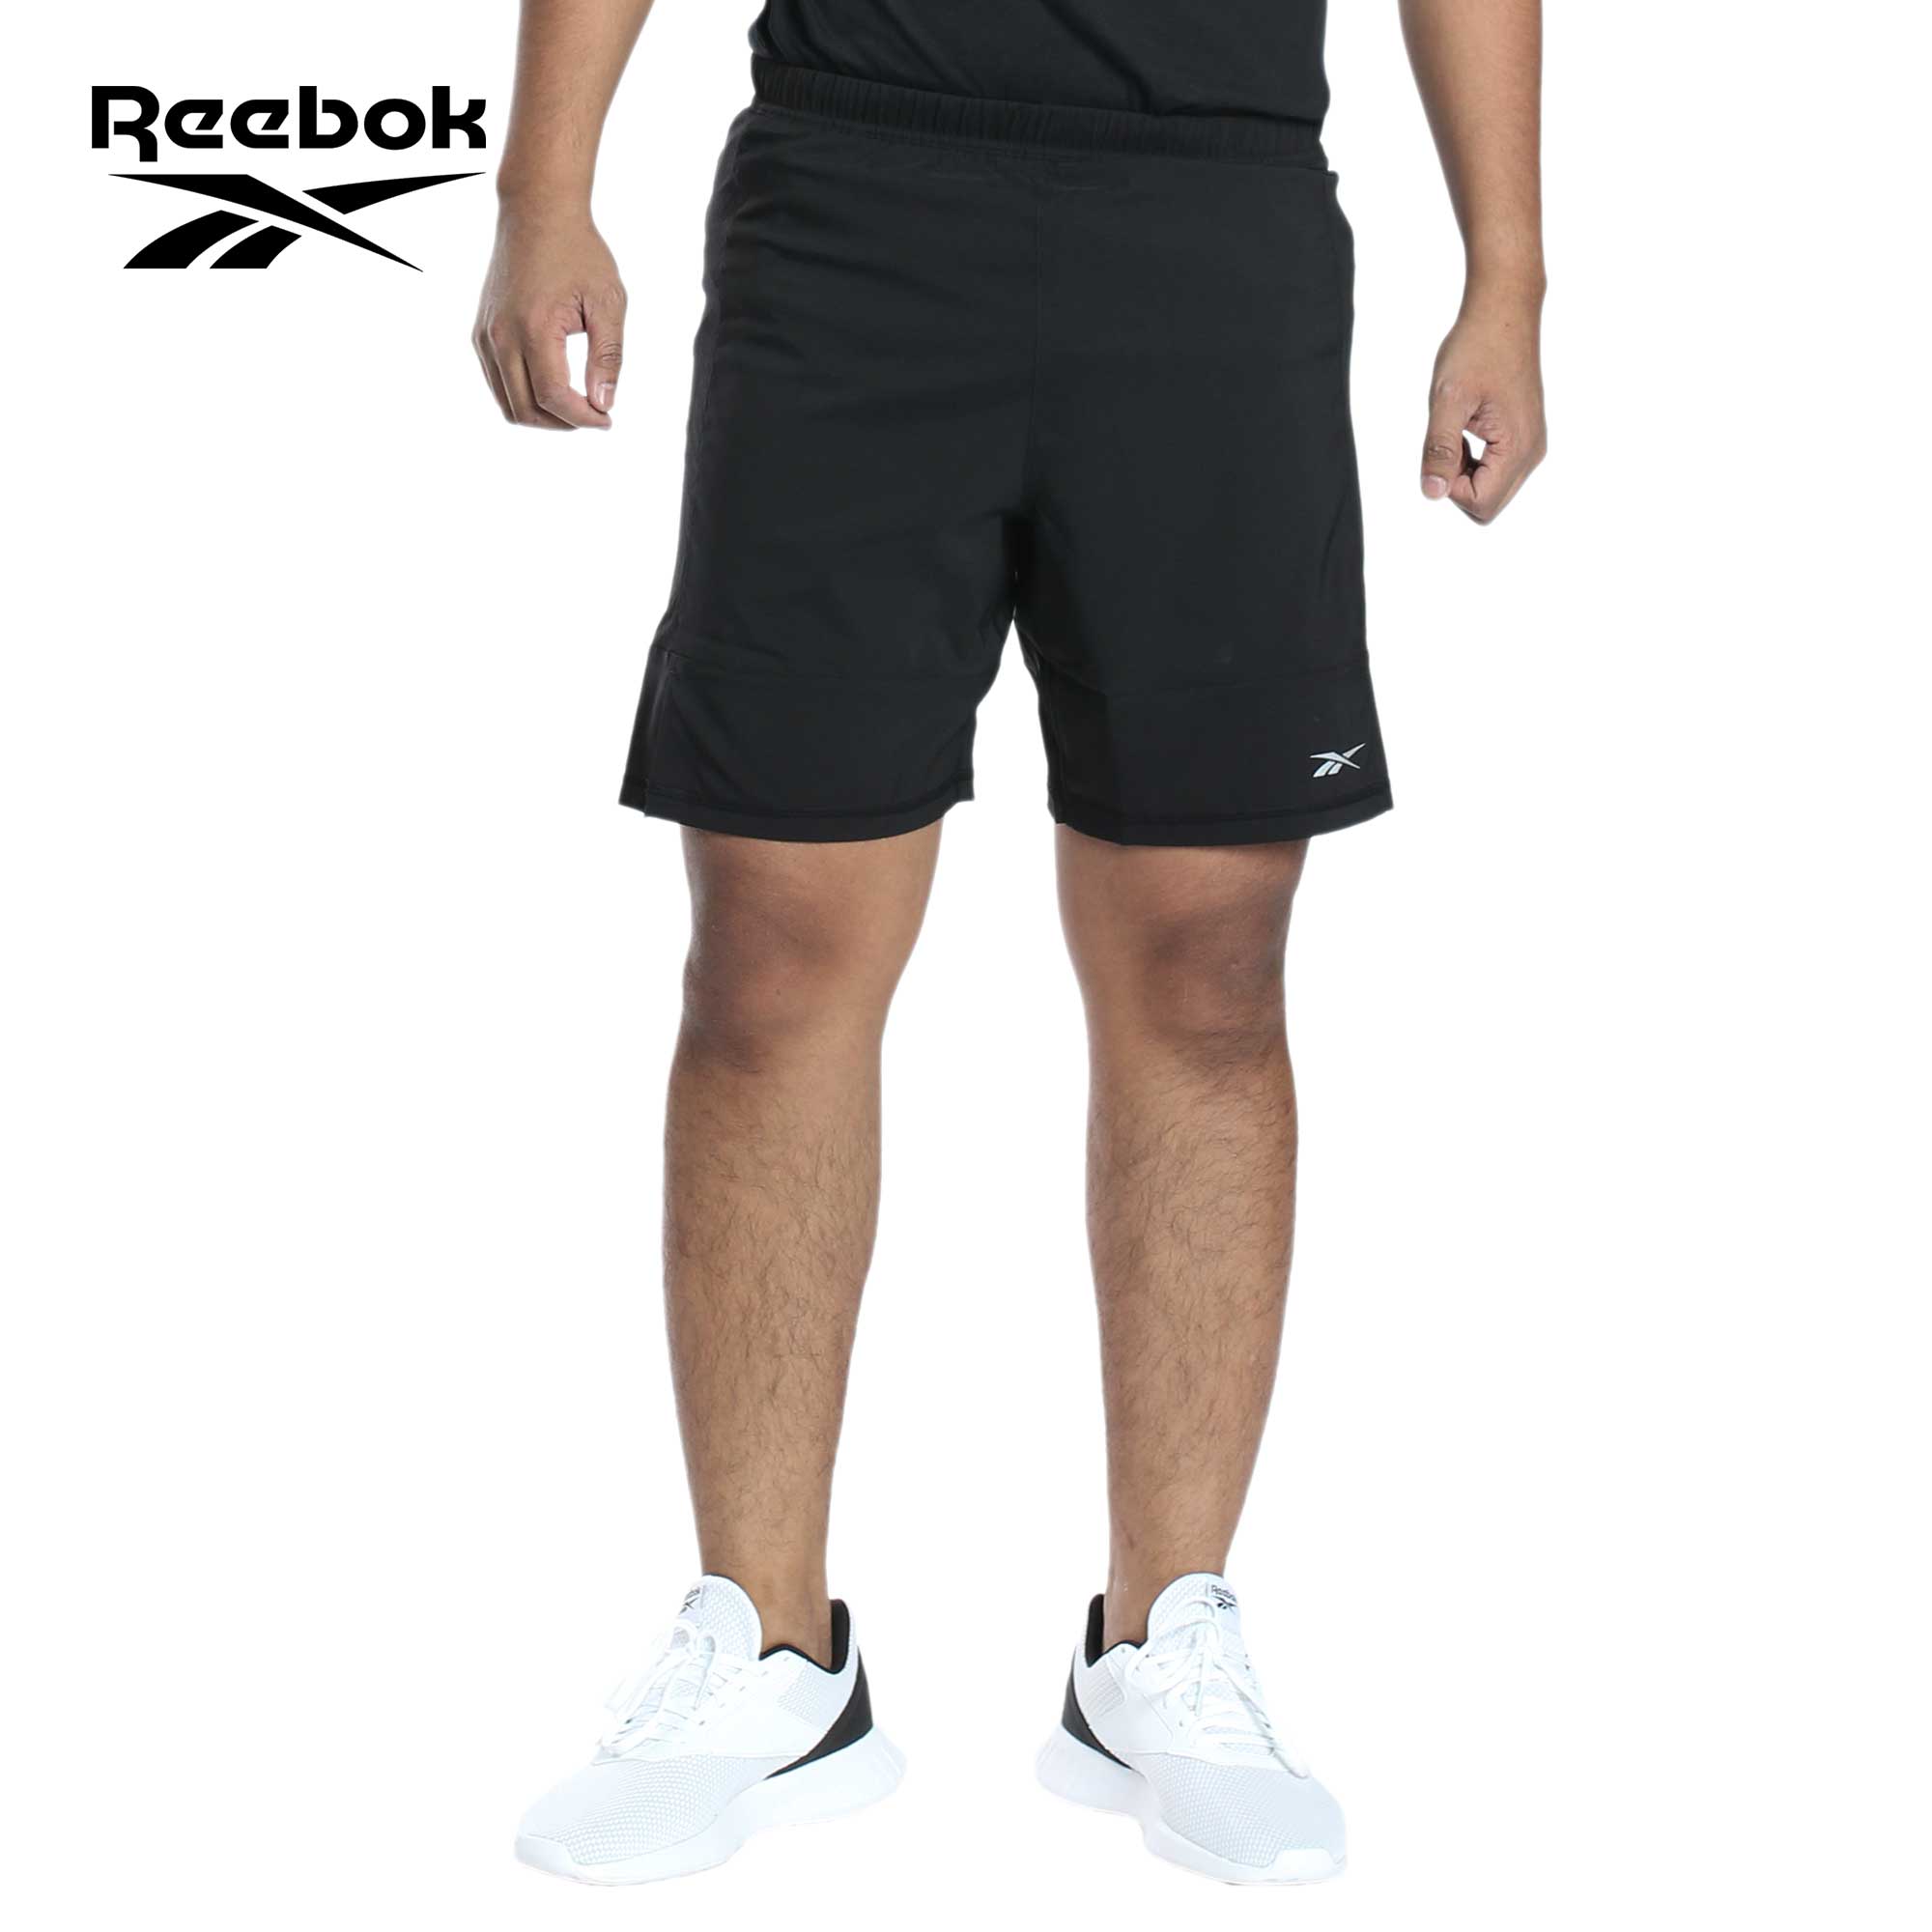 Buy Reebok Shorts Online | lazada.com.ph